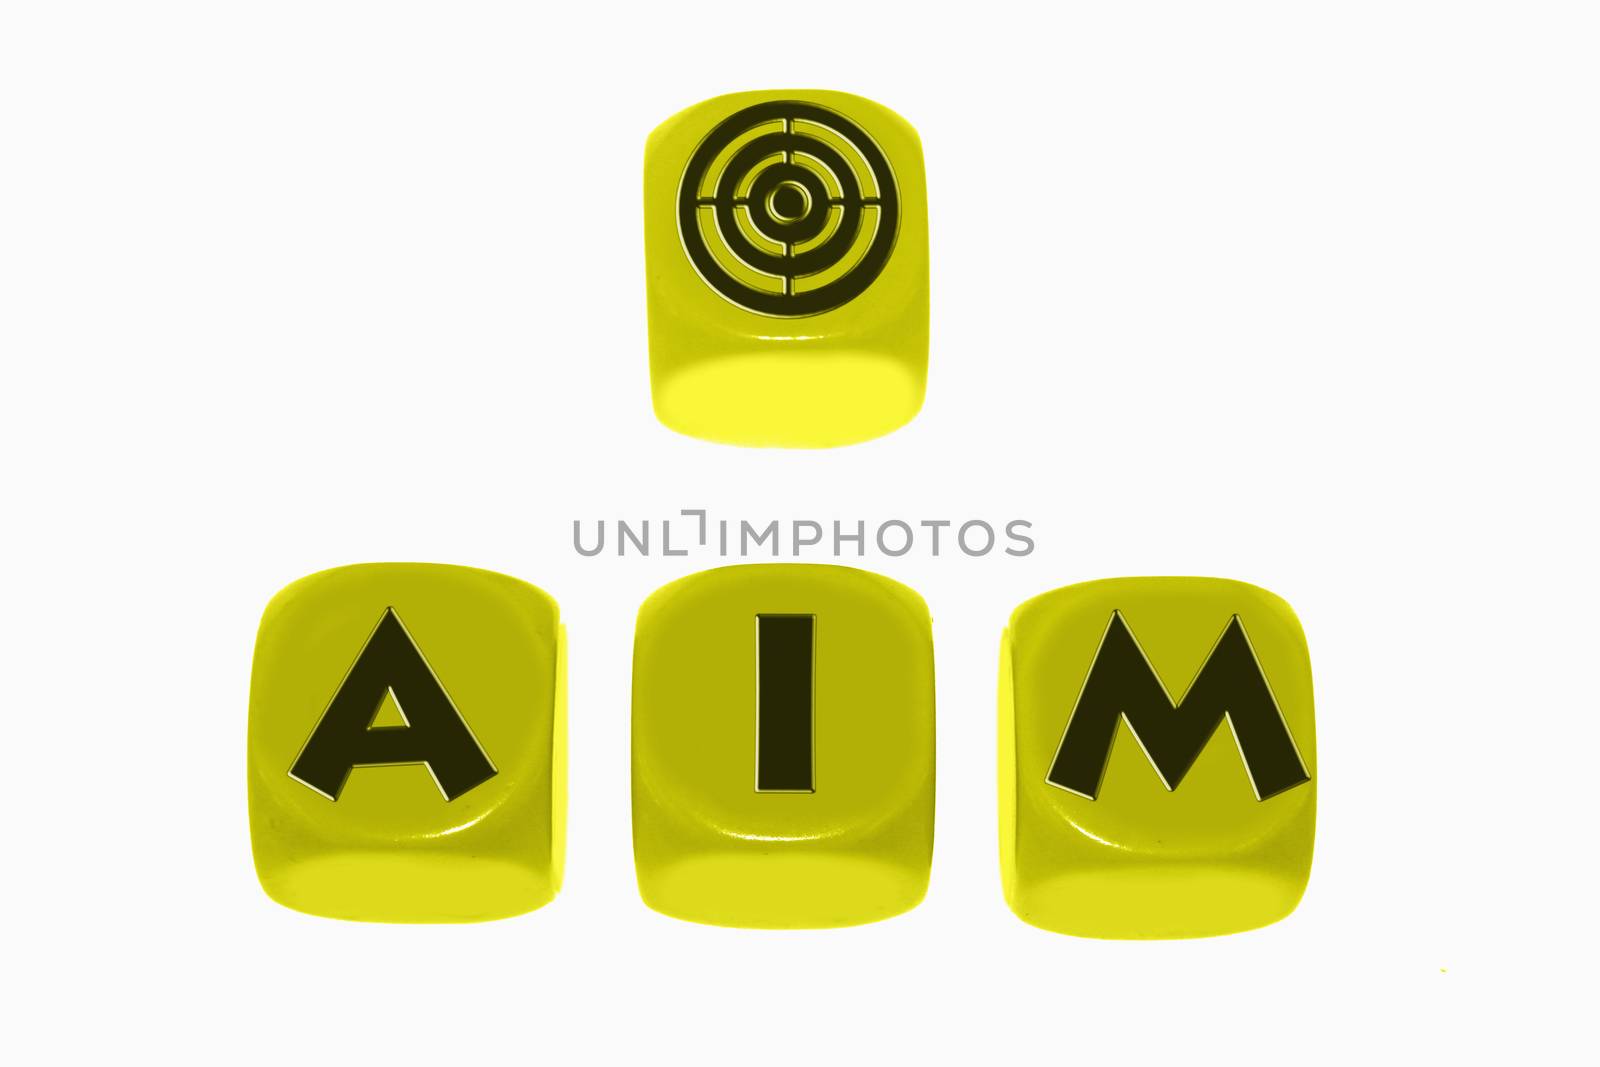 aim symbol with word AIM on cubes